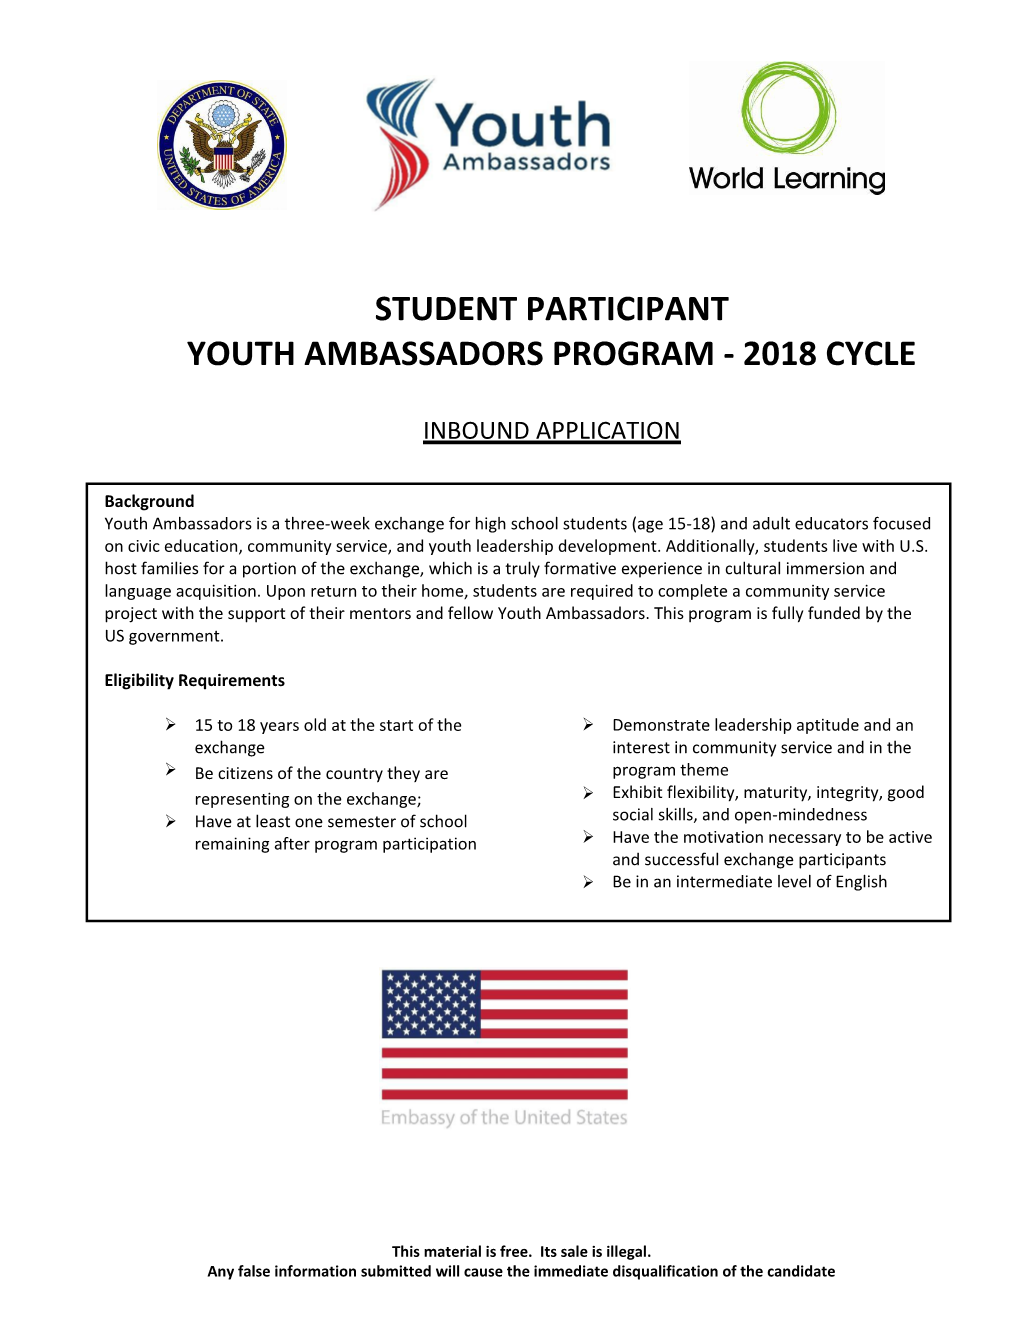 Youth Ambassadors Program - 2018 Cycle